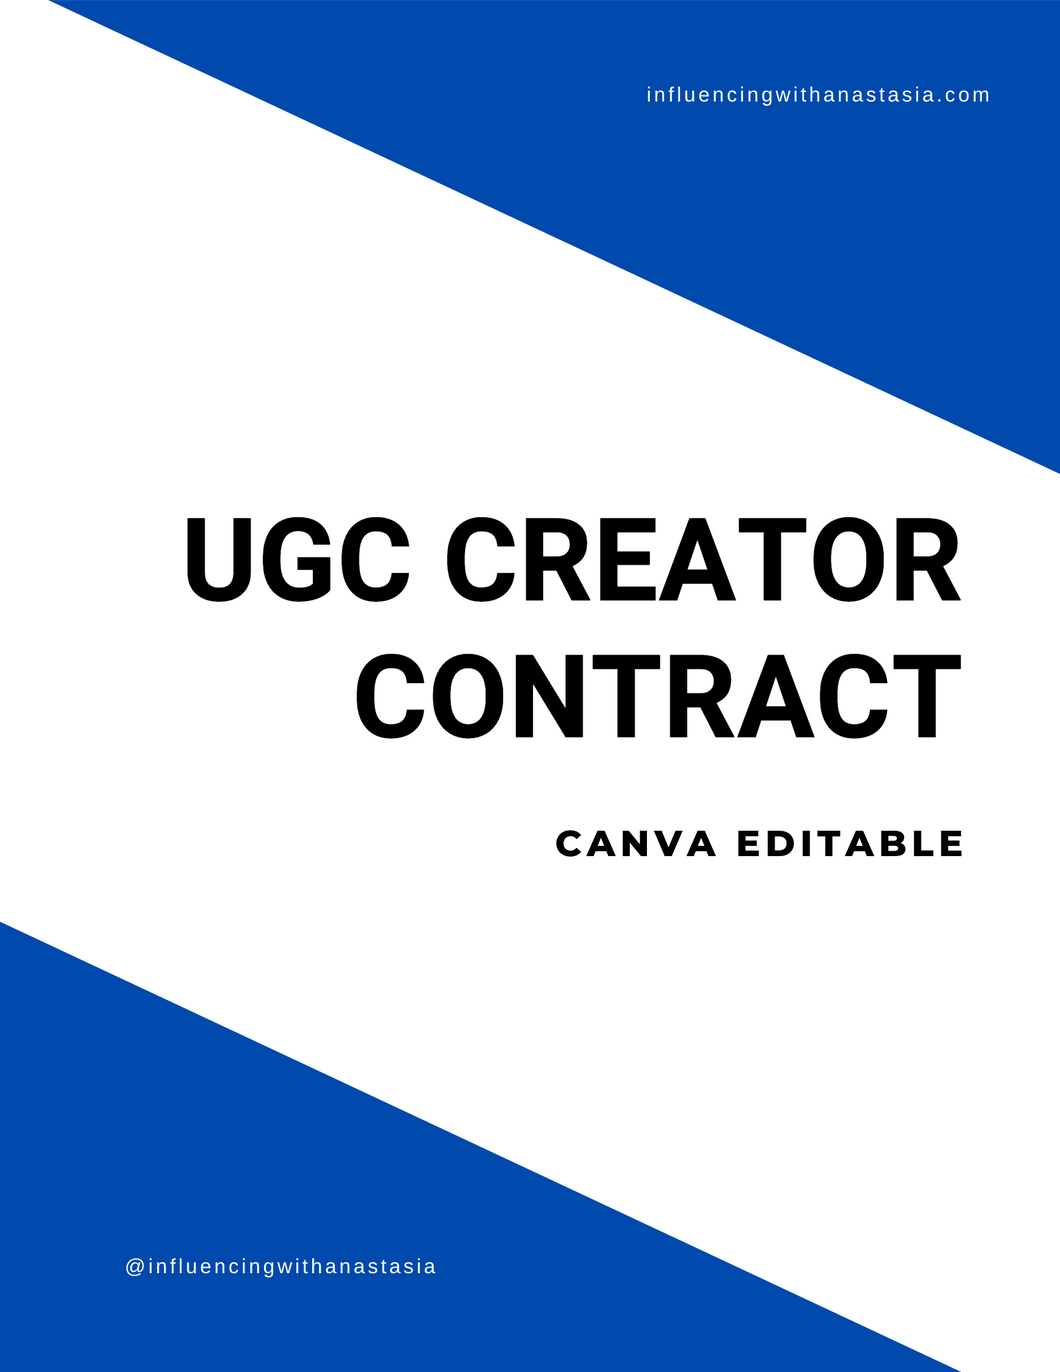 UGC Creator Contract Template (Canva Editable)